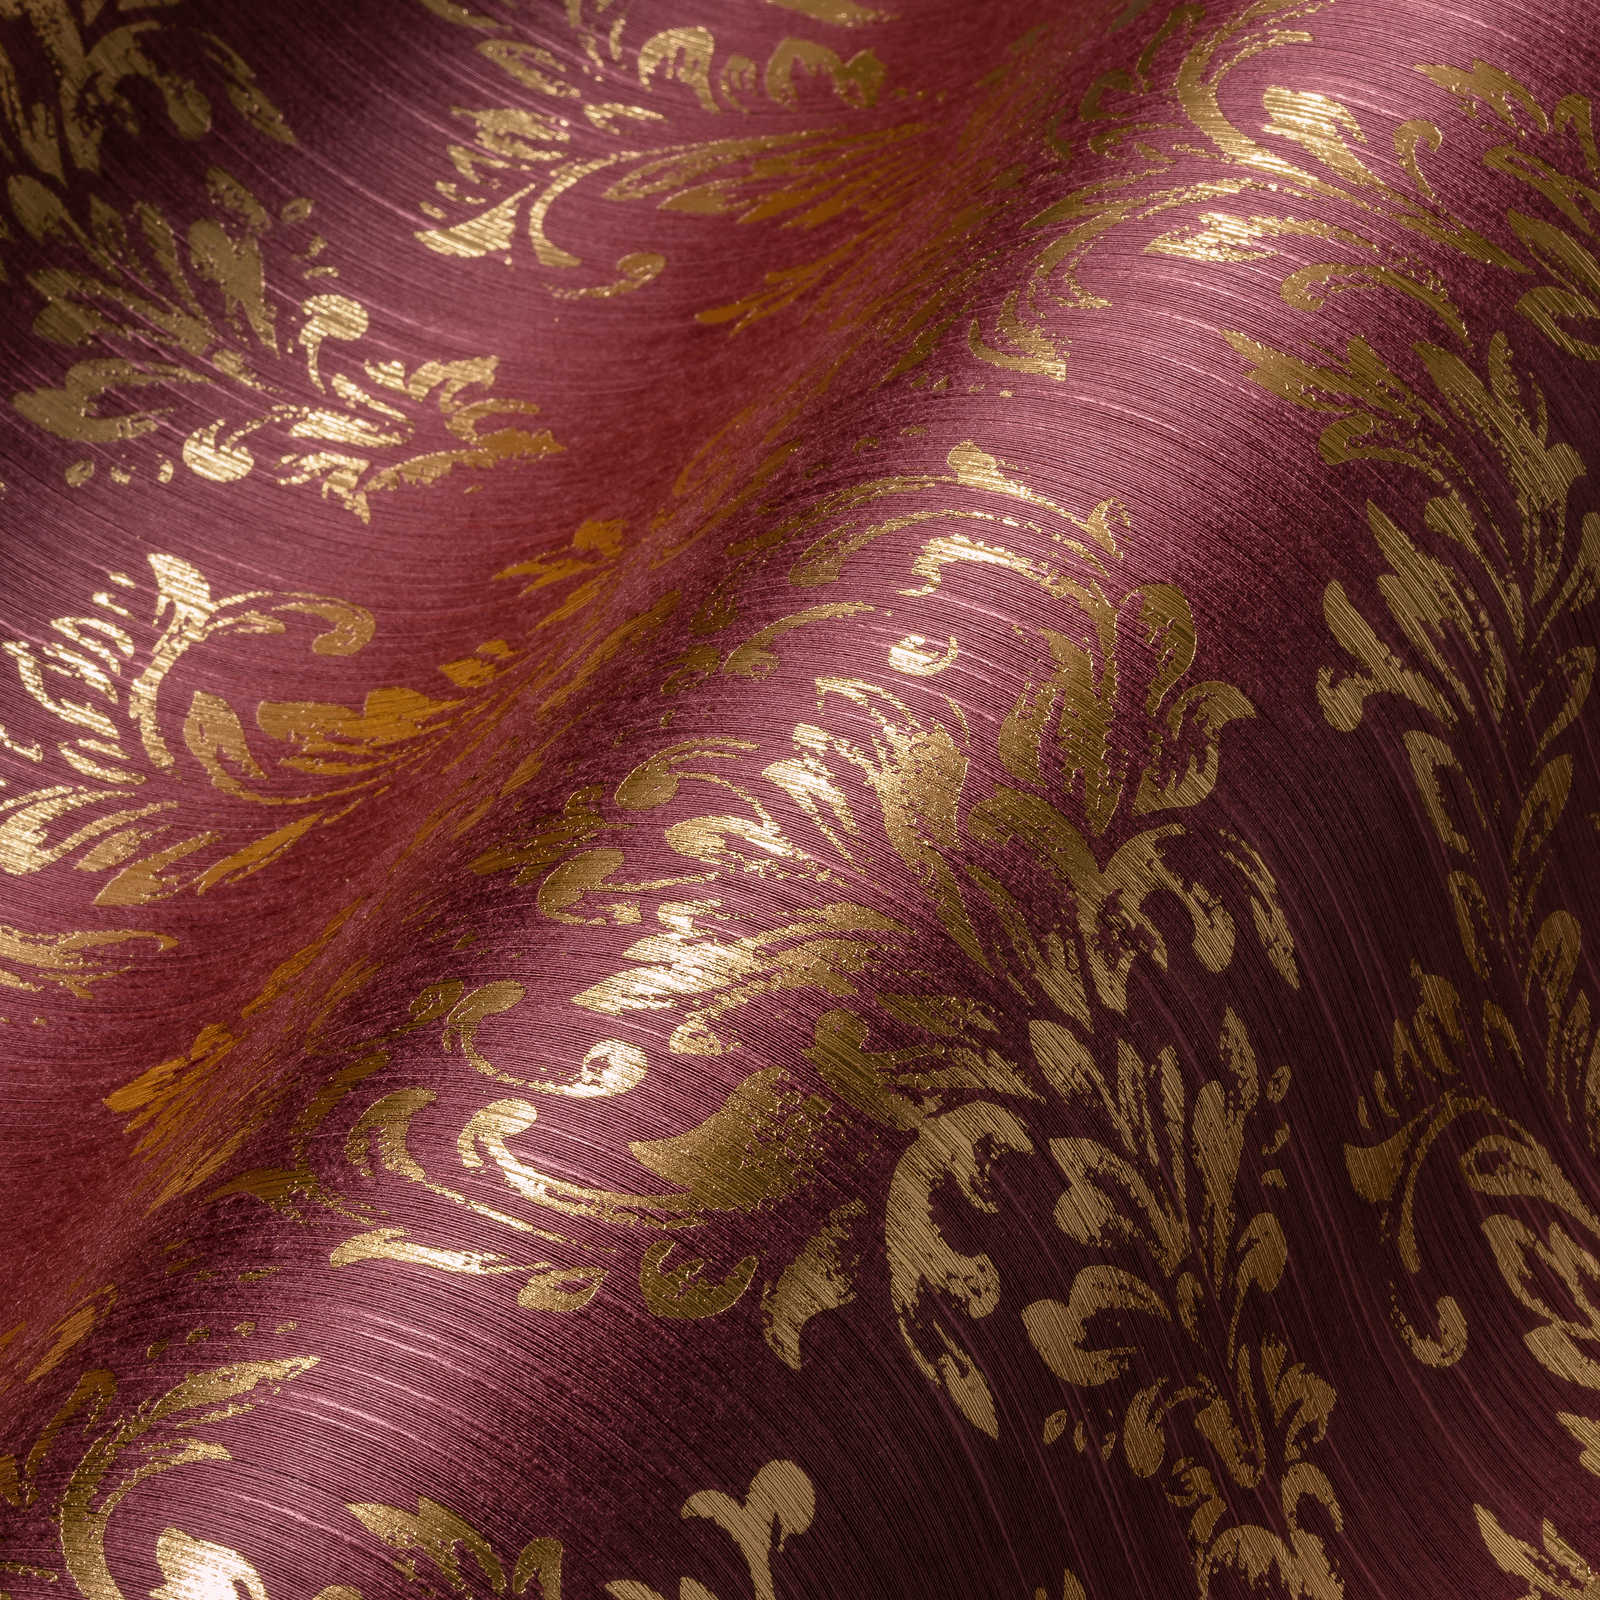             Ornament-Tapete floral mit goldenem Glitzer-Effekt – Gold, Rot
        